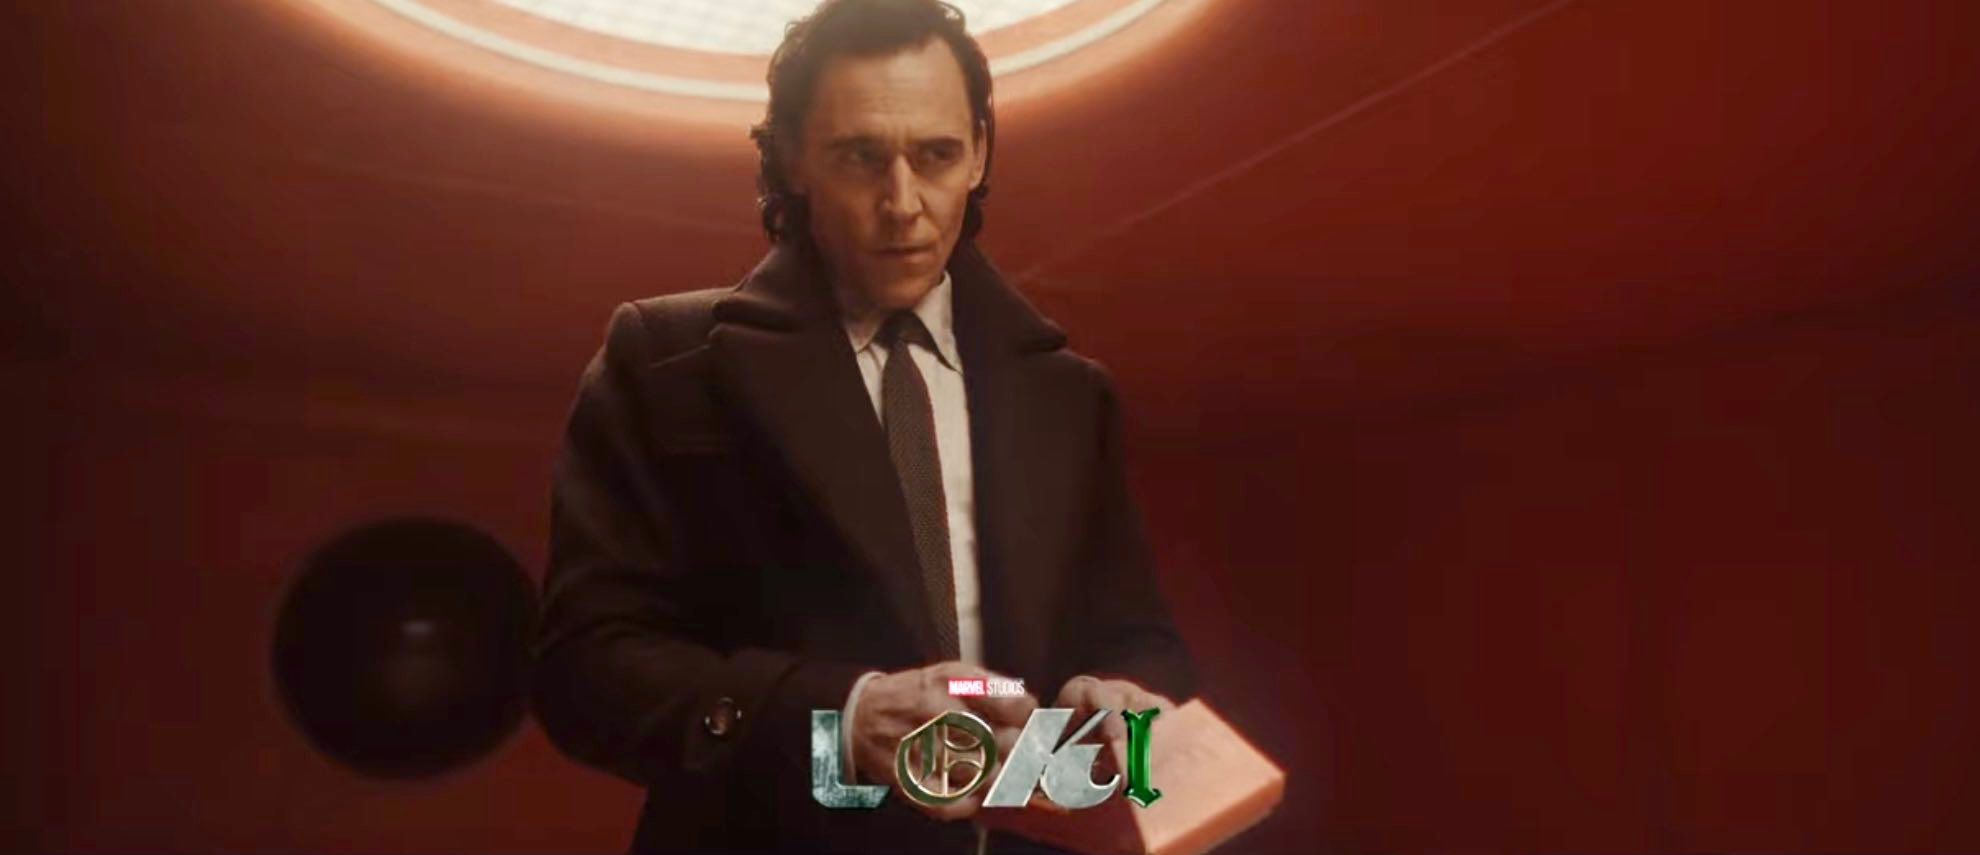 Loki Season 2 footage released: Tom Hiddleston, Owen Wilson go undercover